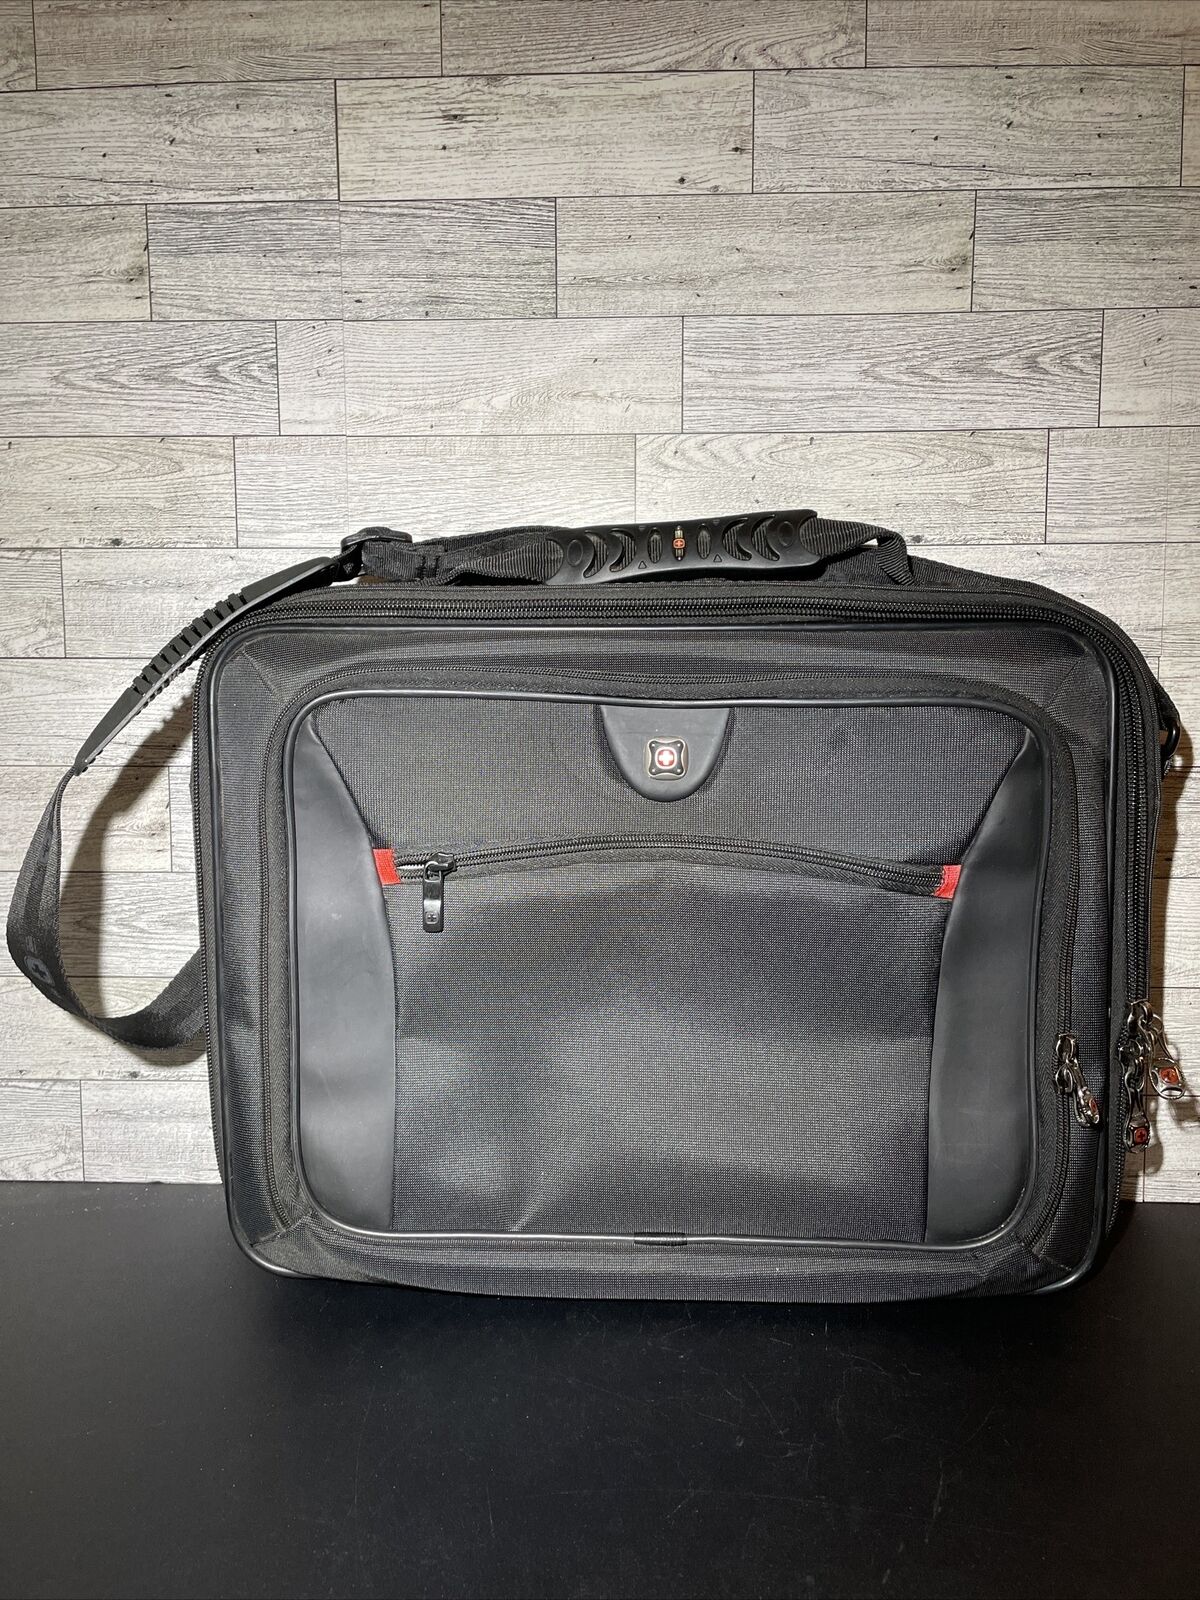 Insight Swissgear Laptop Travel Bag Case Wenger Black 15.6 Inch